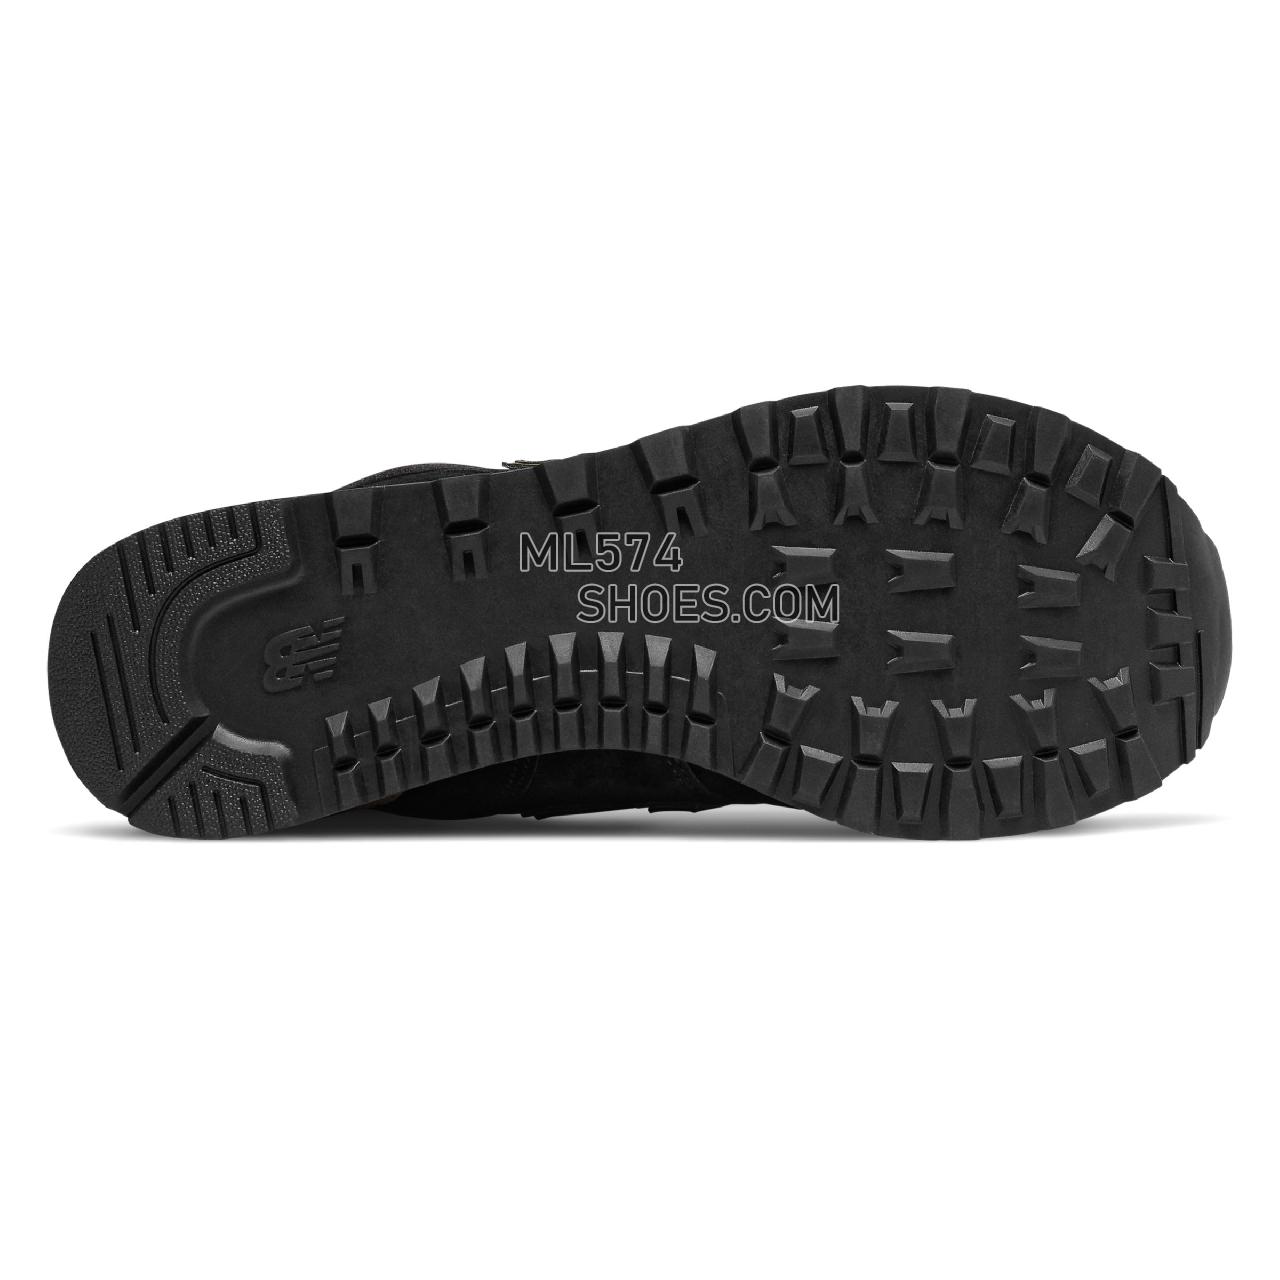 New Balance 574 - Men's Classic Sneakers - Black with Tan - ML574JFE